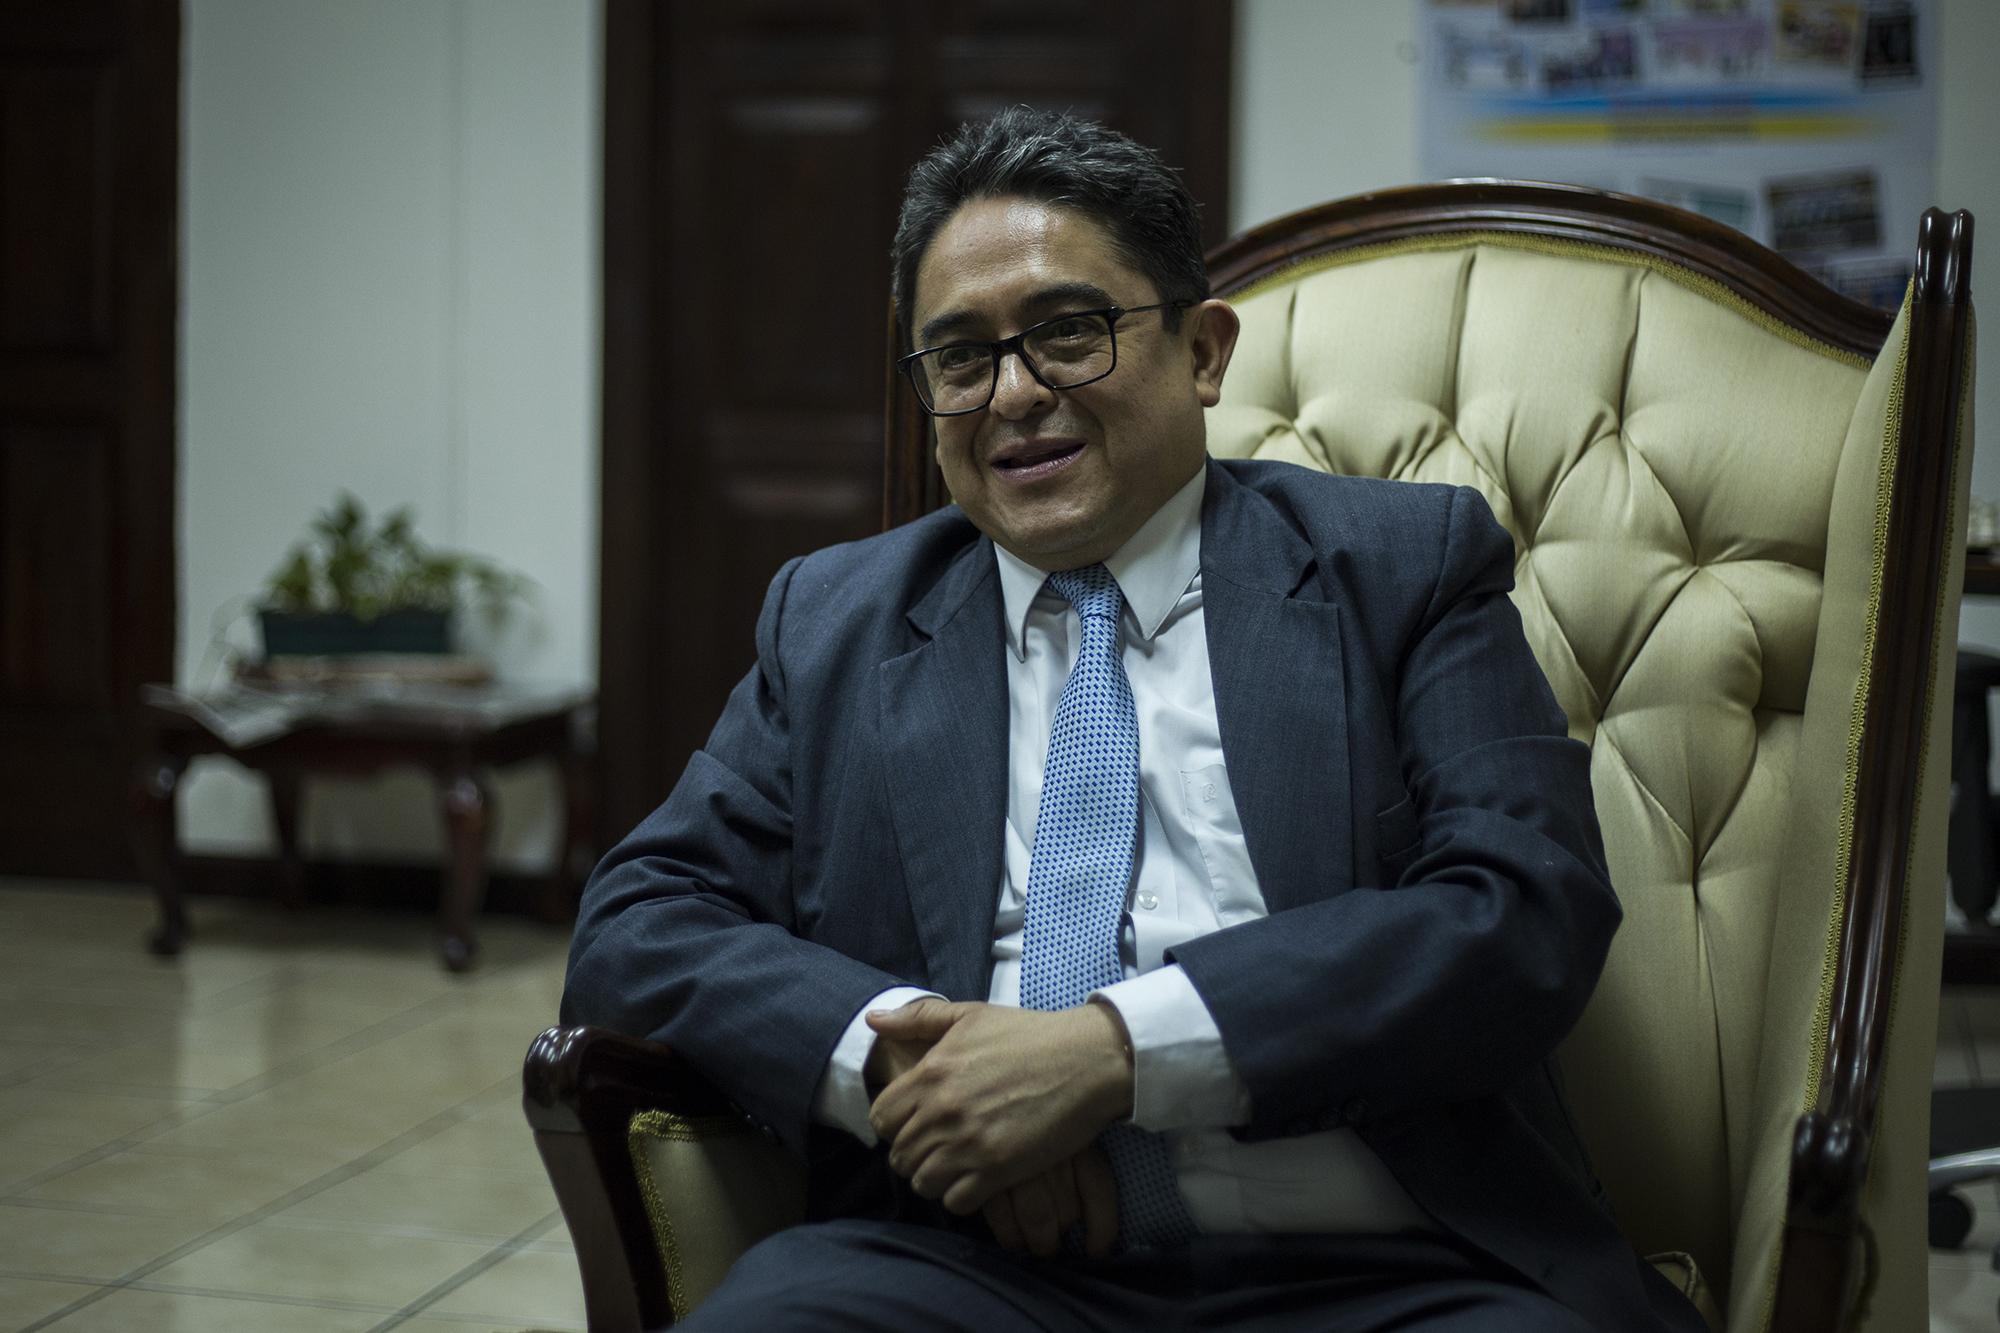 Jordán Rodas, Guatemala’s Human Rights Ombudsperson, during an interview with the newspaper El Faro. Guatemala City, September 3, 2018. Photo: Victor Peña/El Faro